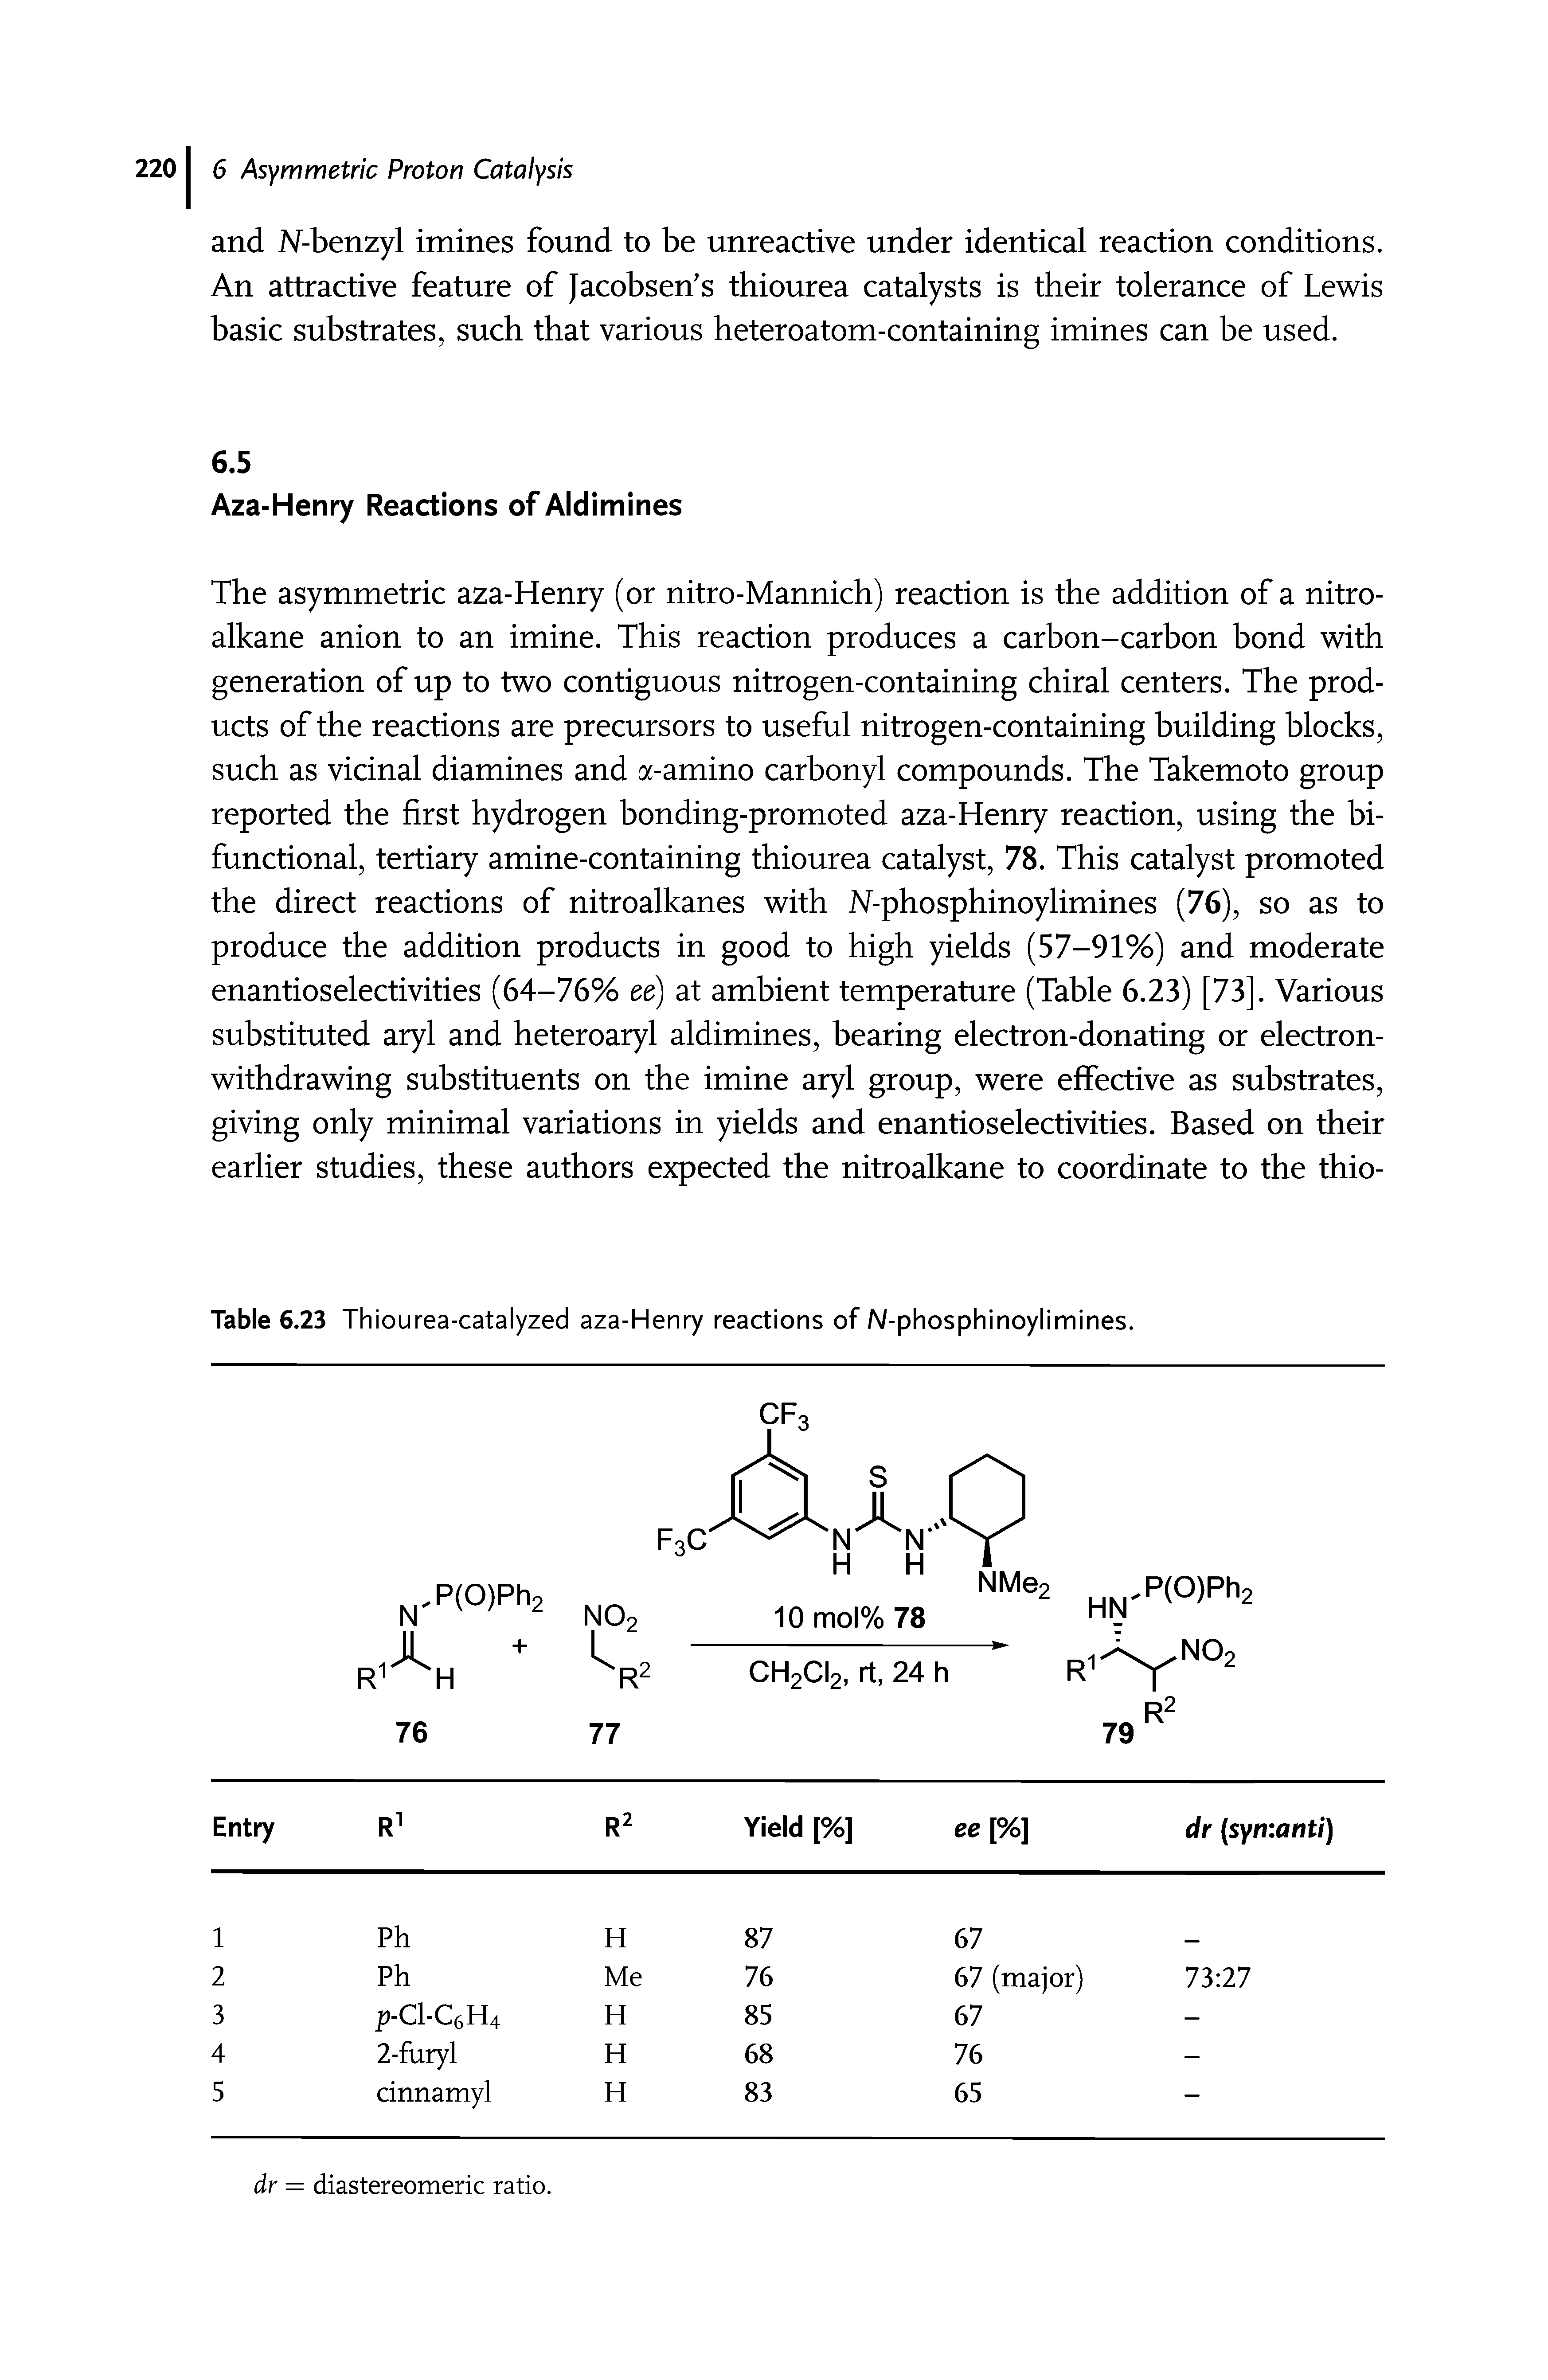 Table 6.23 Thiourea-catalyzed aza-Henry reactions of N-phosphinoylimines.